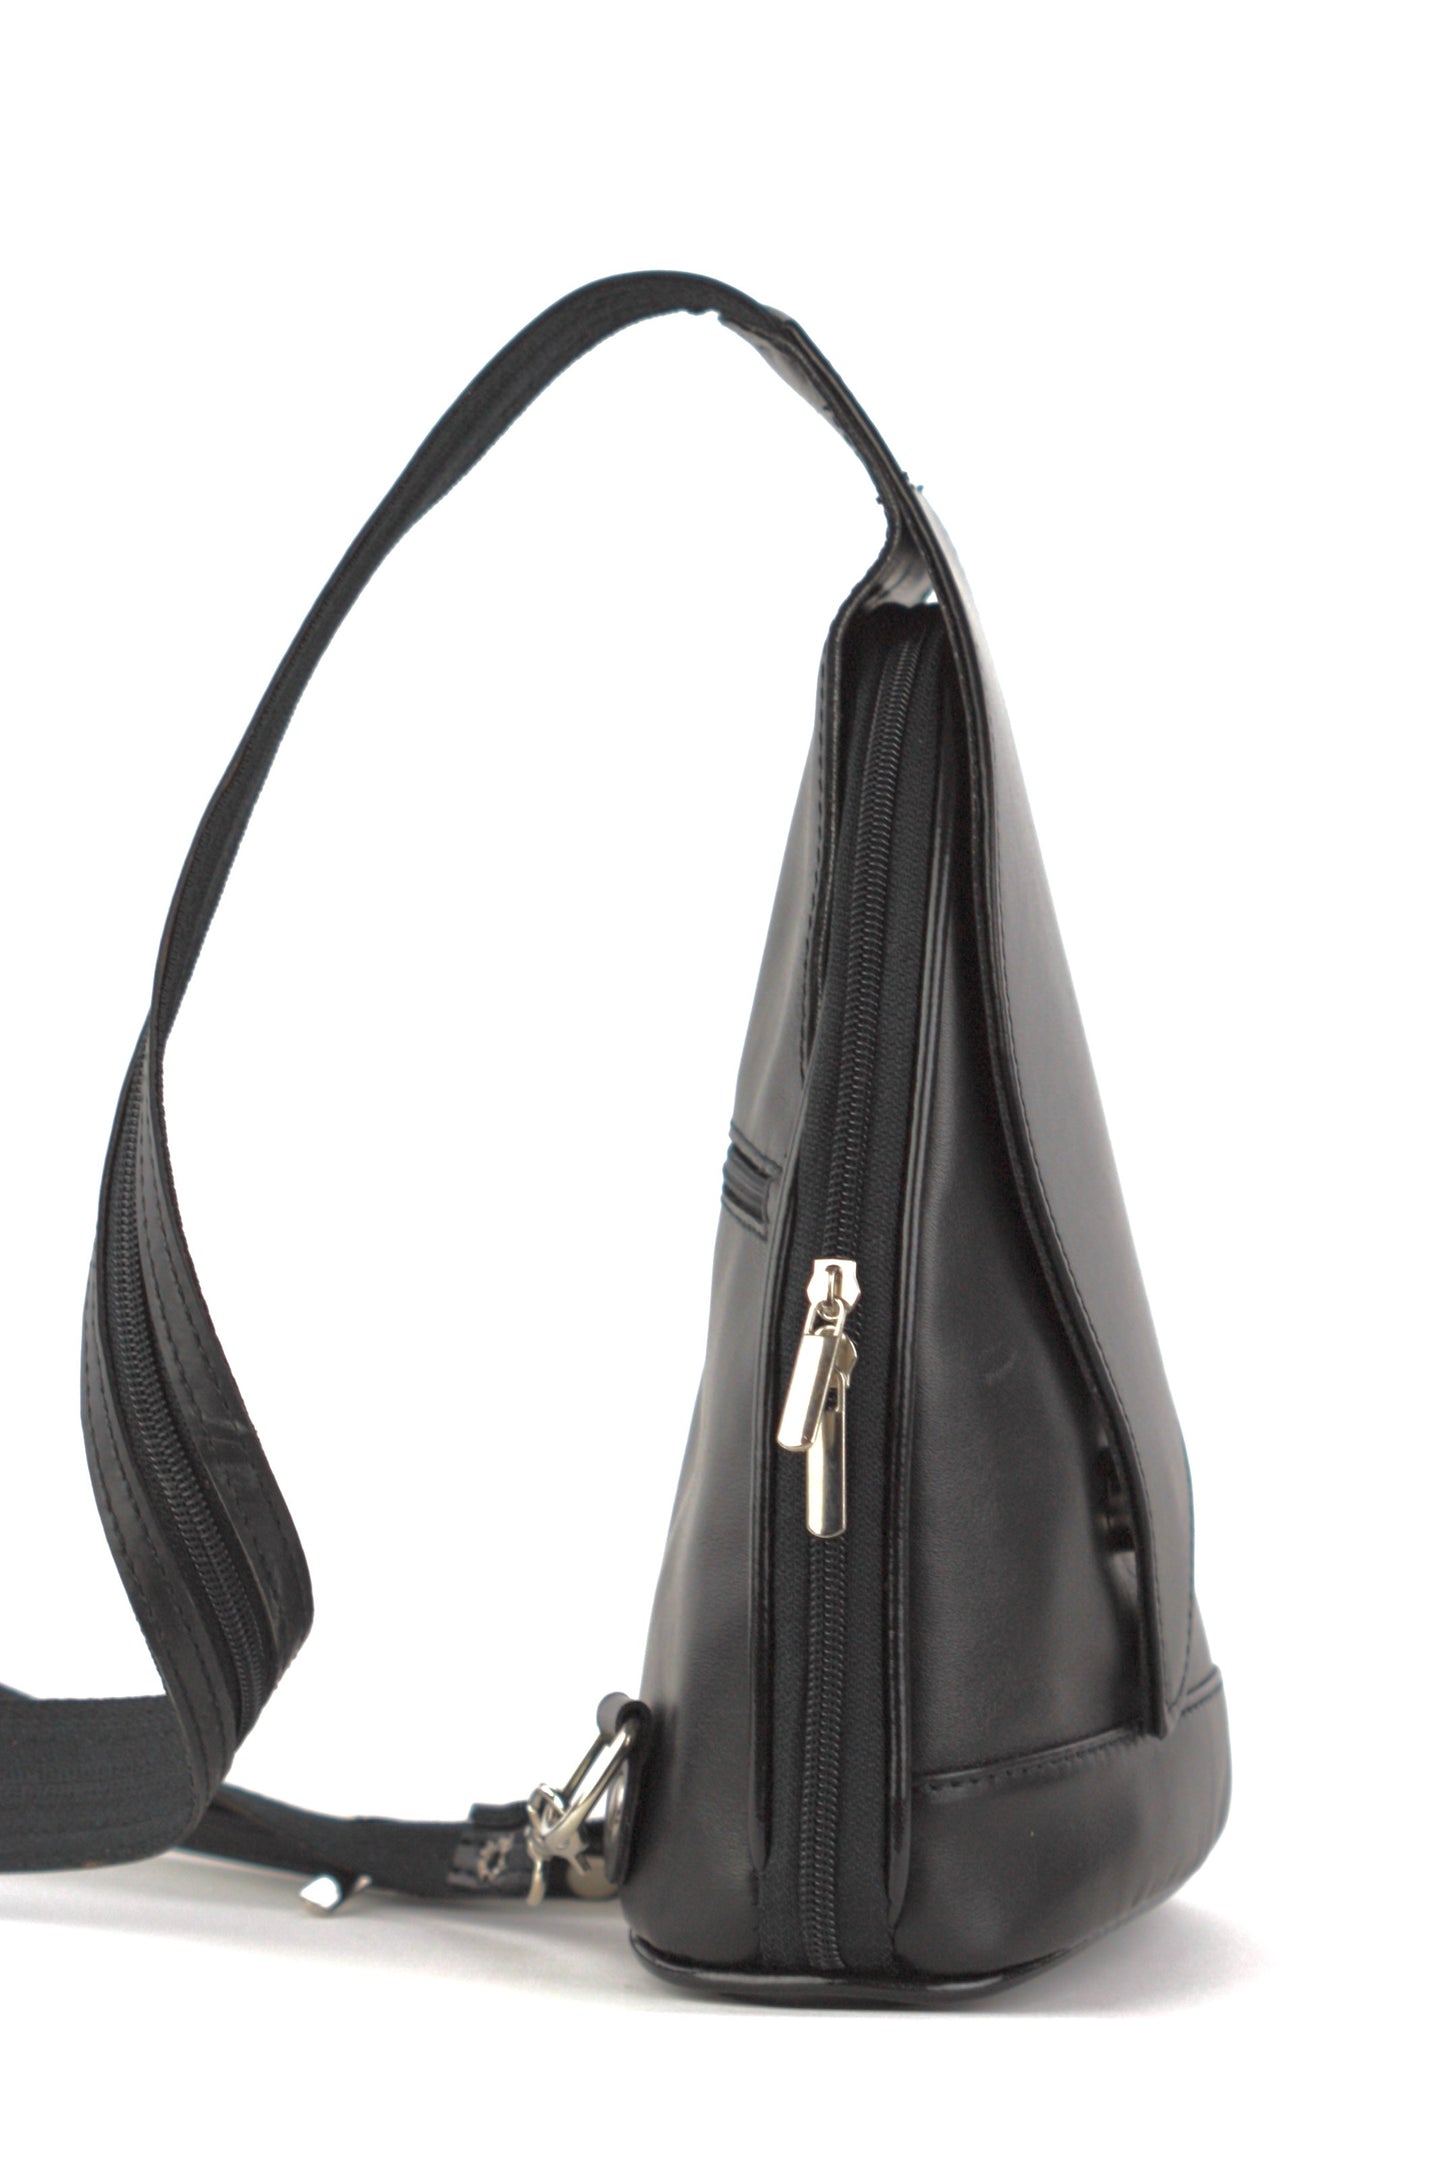 Foglia backpack in black